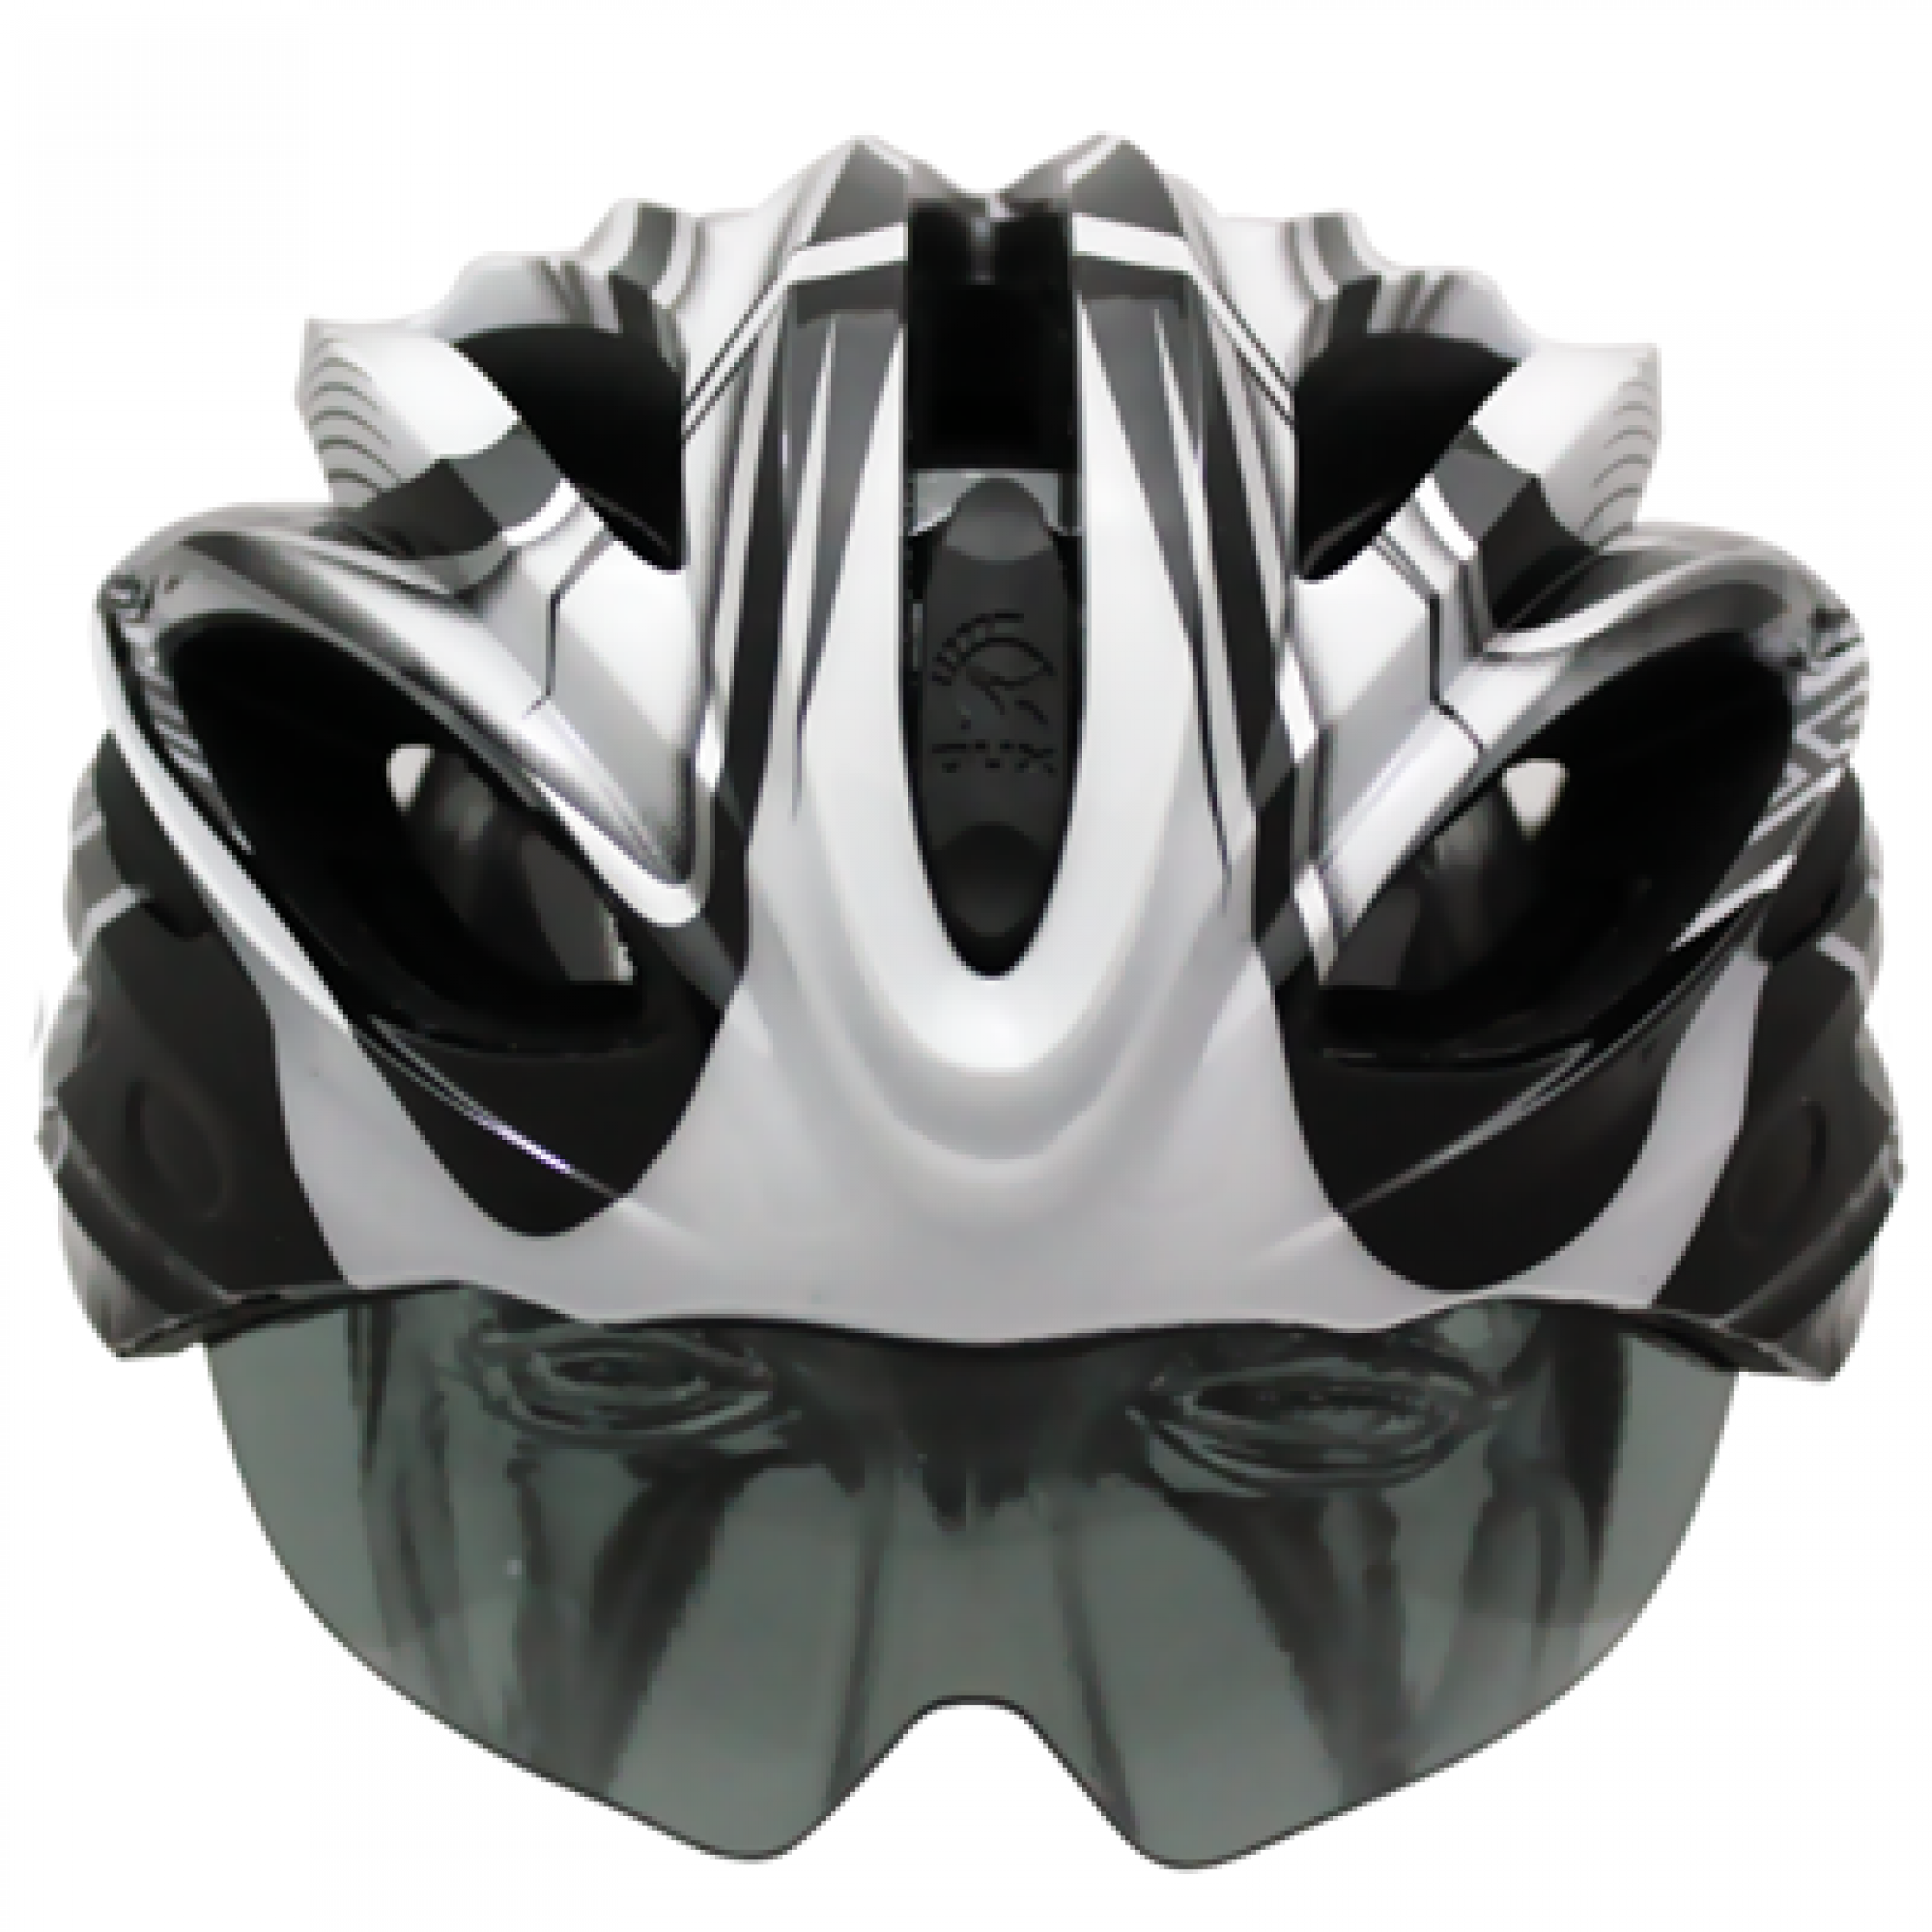 dux-helmet-grey-visor.png